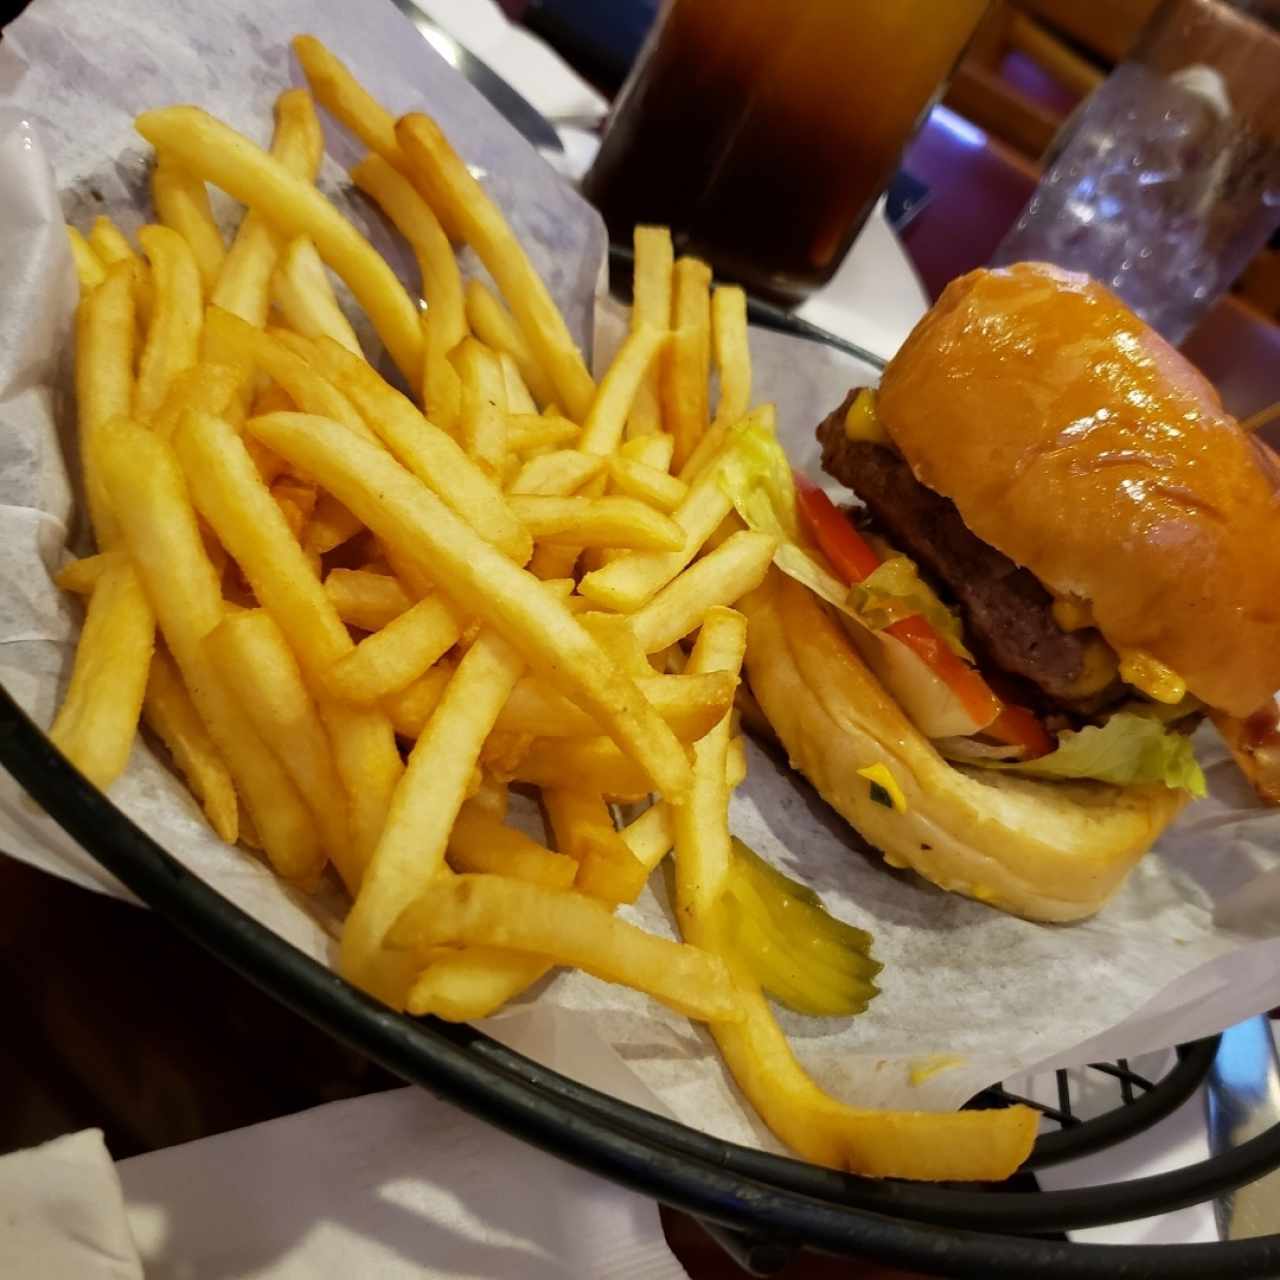 Steakhouse Burger